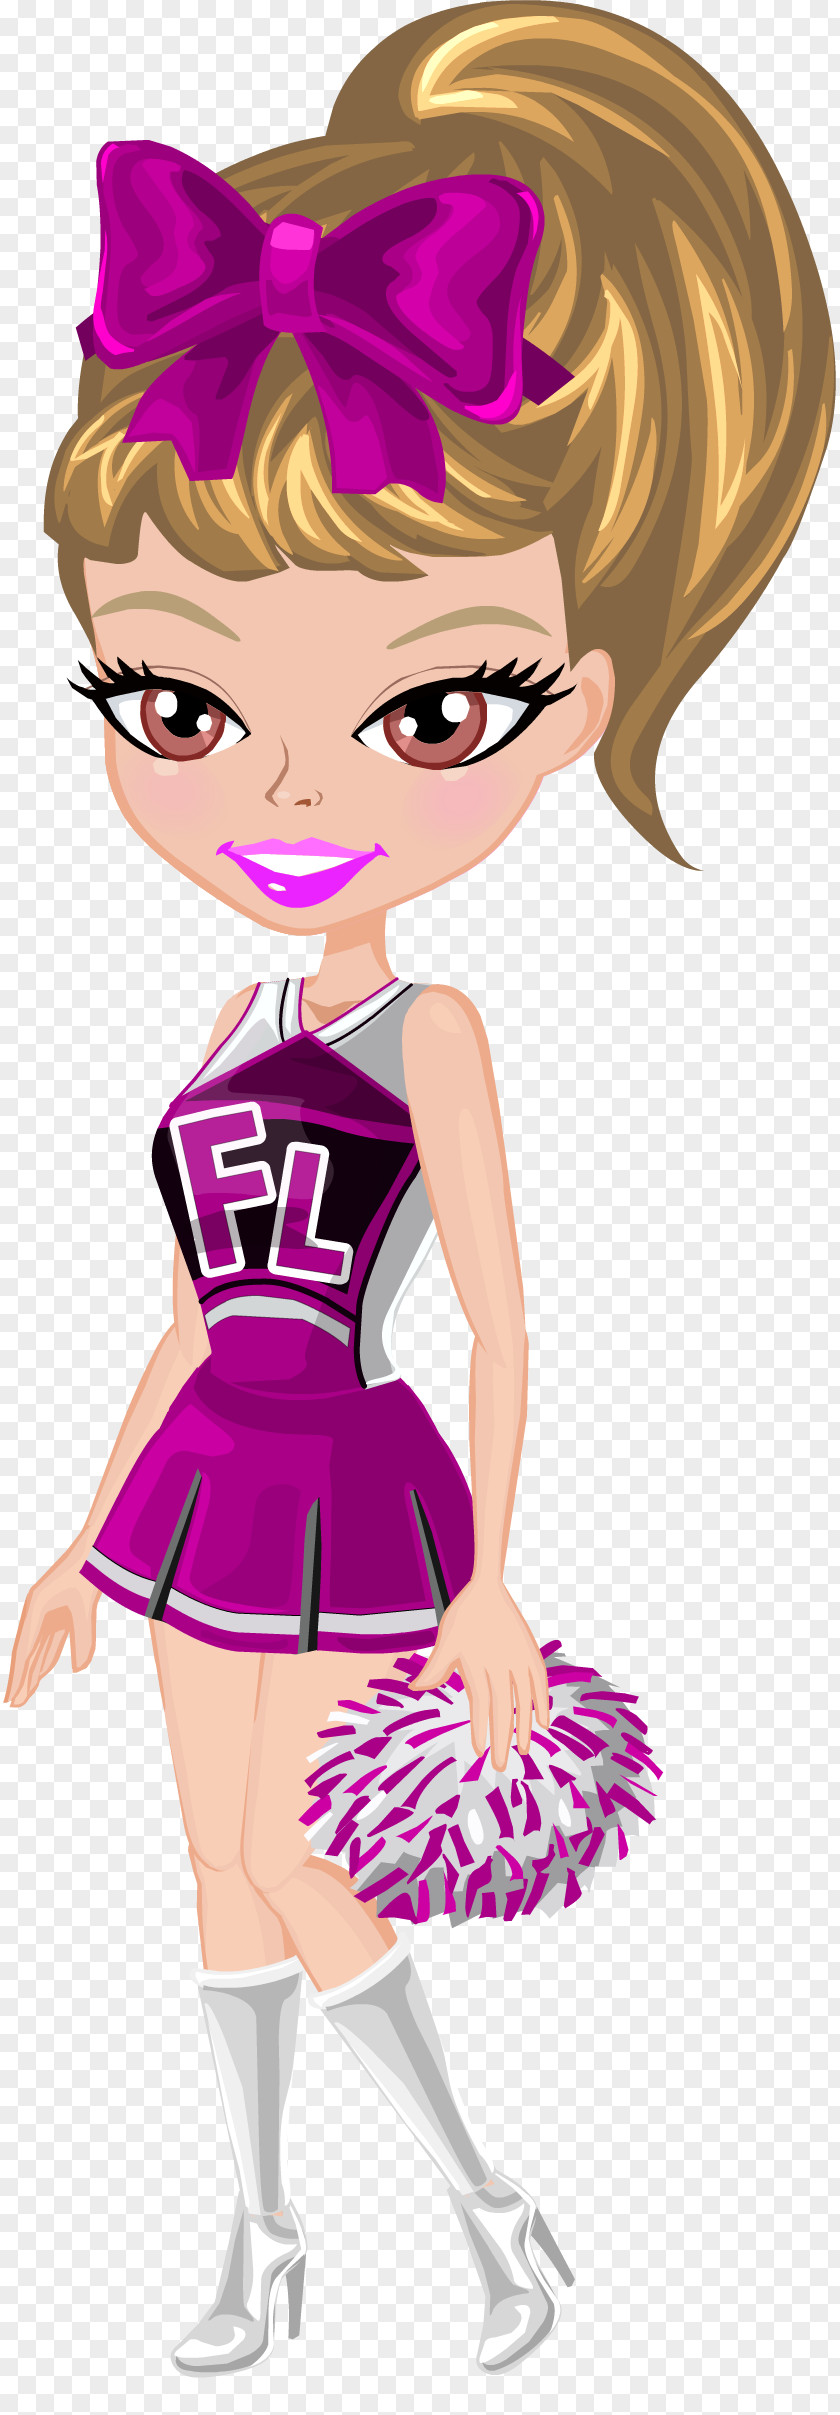 Cheerleader Cheerleading Wiki Clip Art PNG